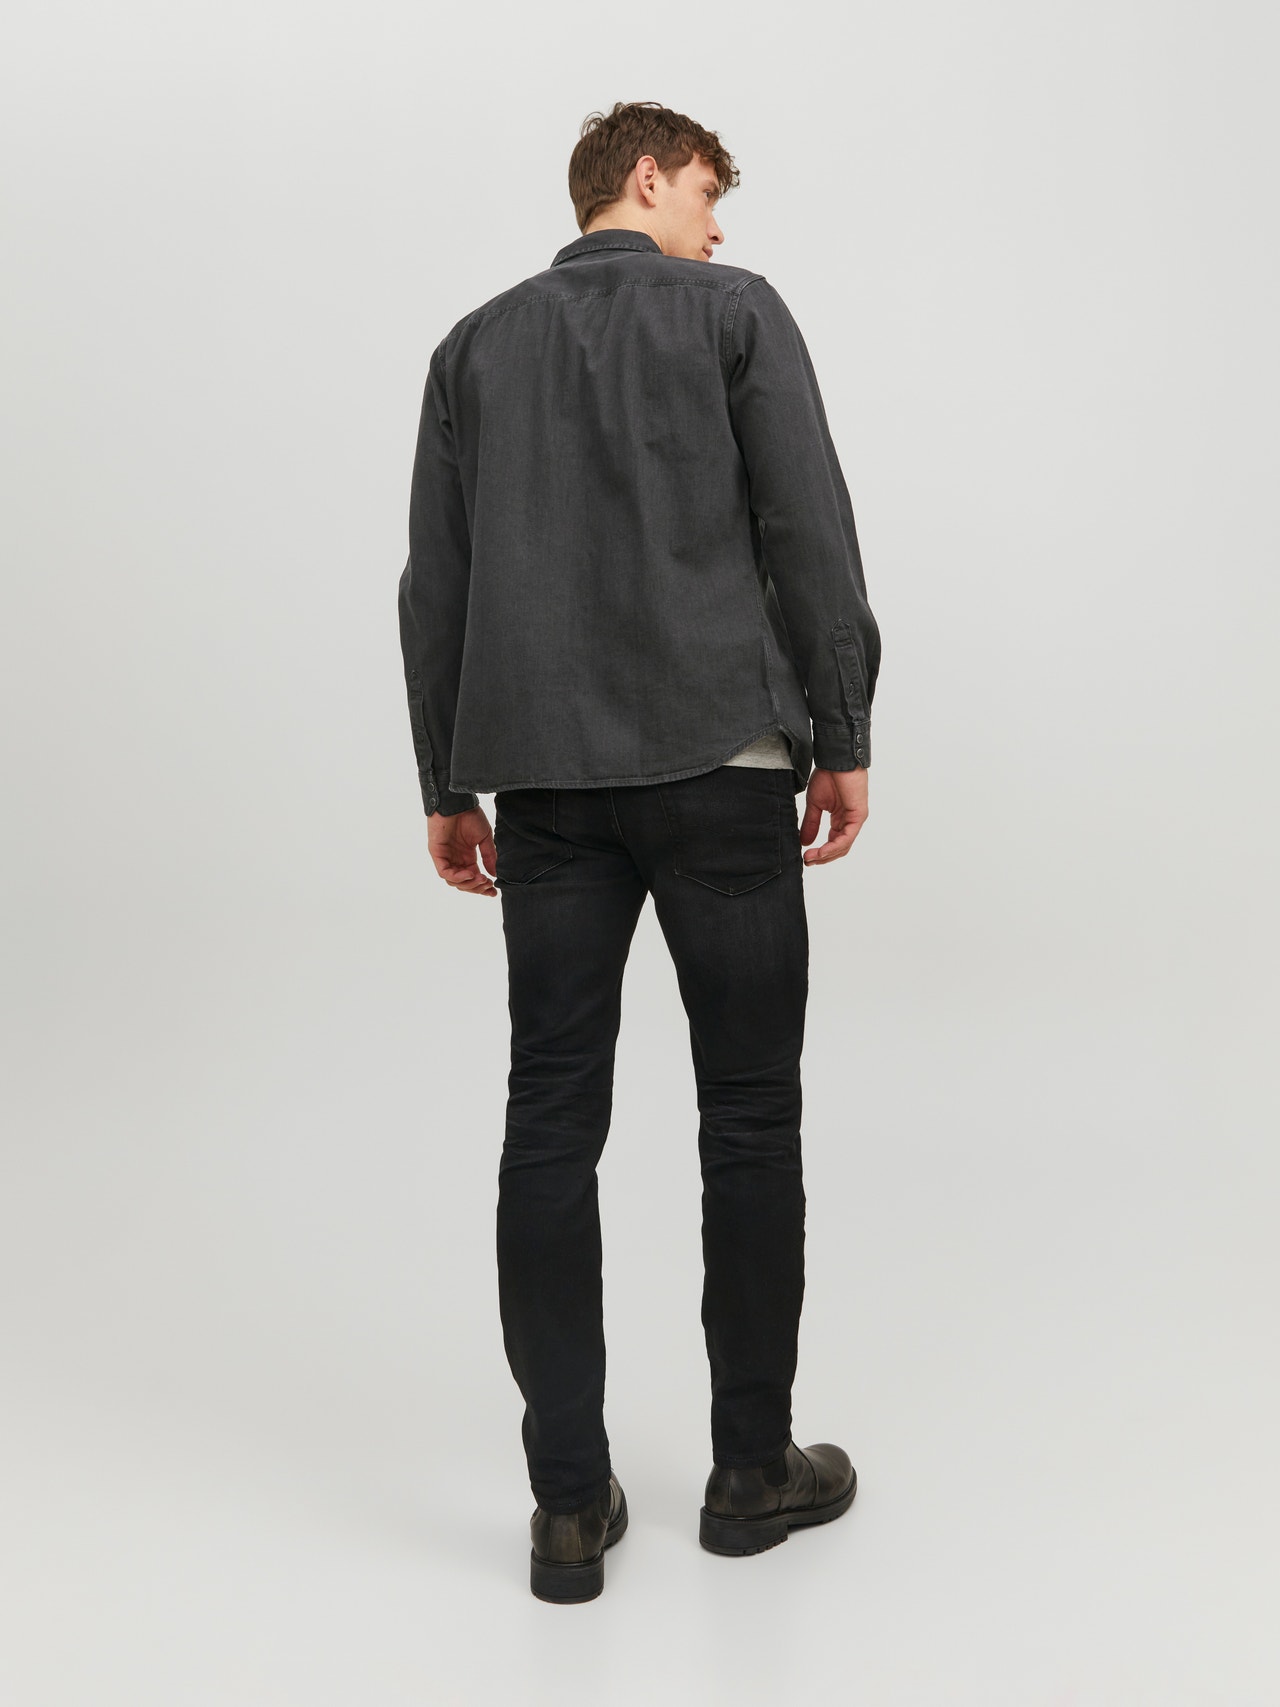 Jack & Jones Camisa de Ganga Slim Fit -Black Denim - 12138115